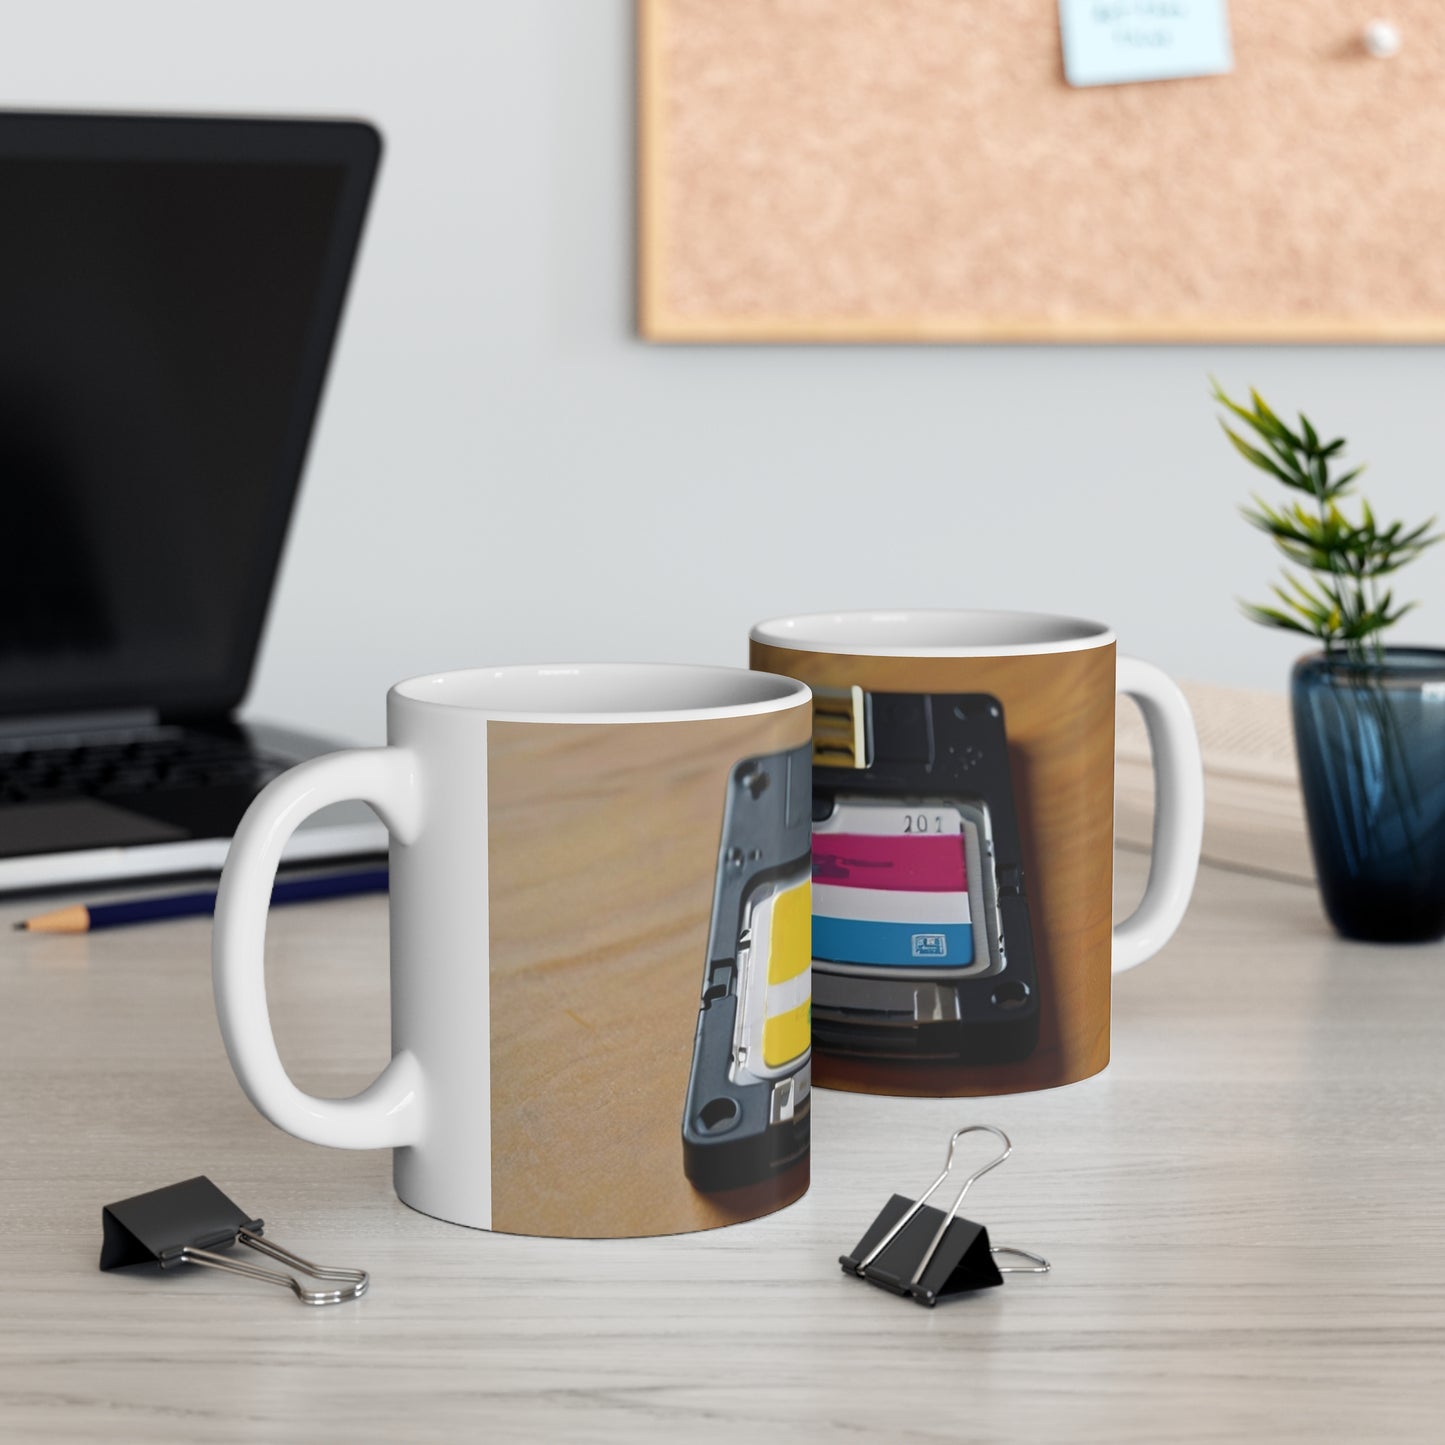 Colourful Floppy Disk Mug - Ceramic Coffee Mug 11oz